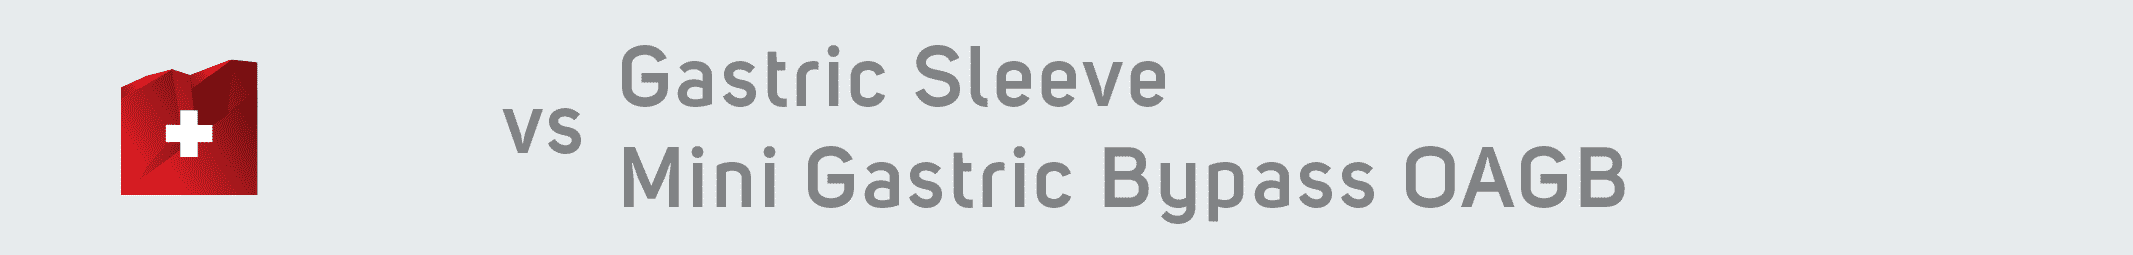 banner gastric sleeve vs mini gastric bypass